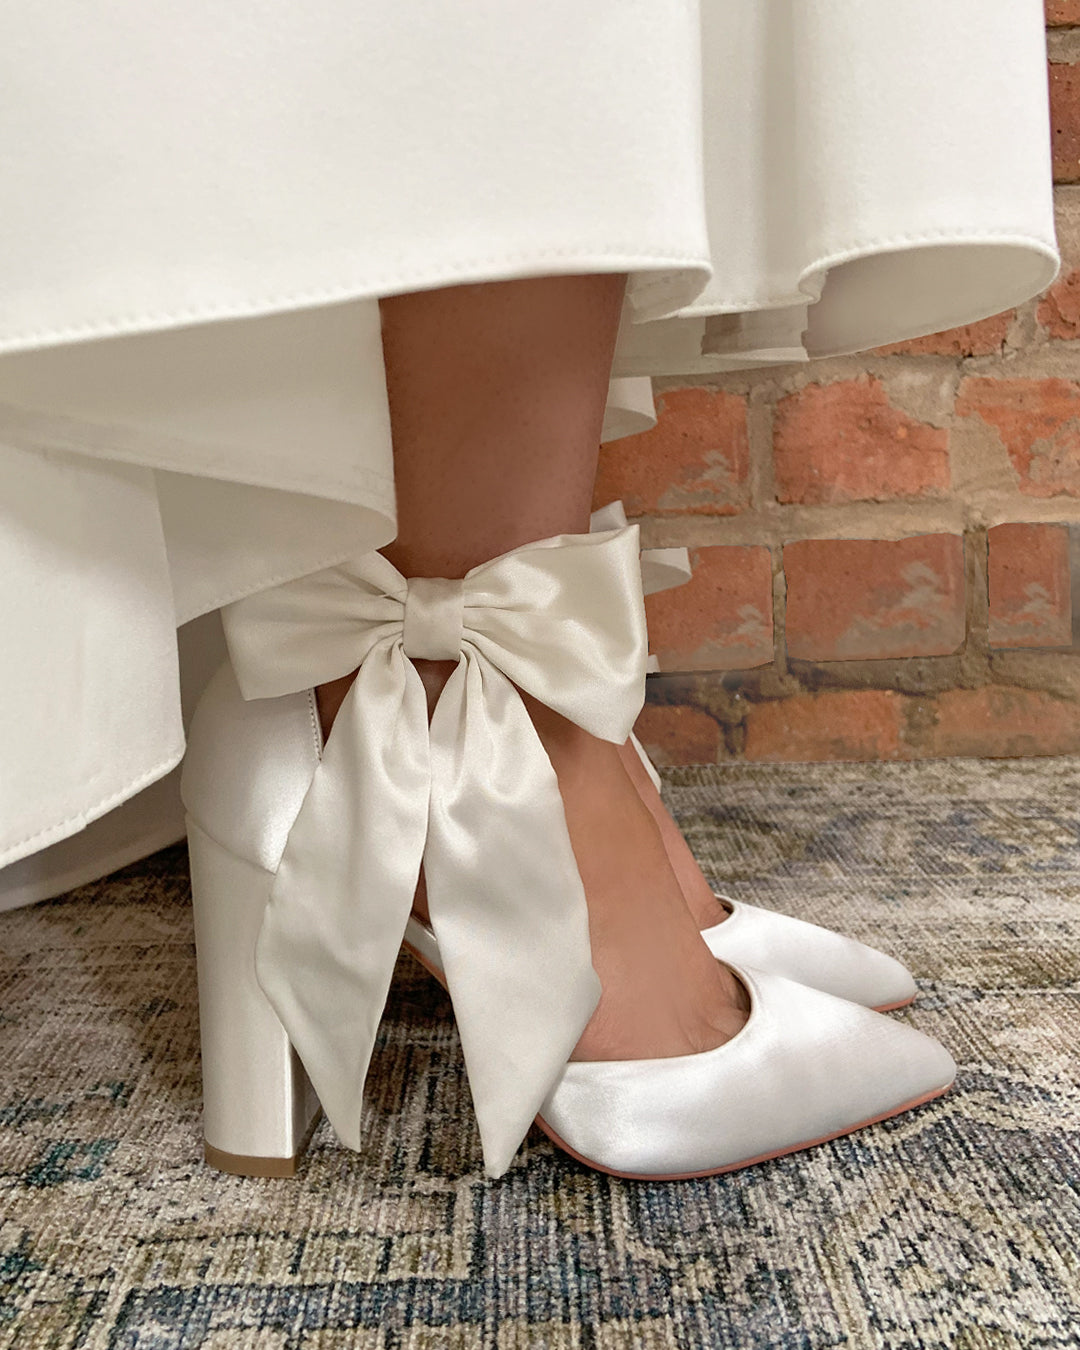 Arabella oversized satin bow block heels